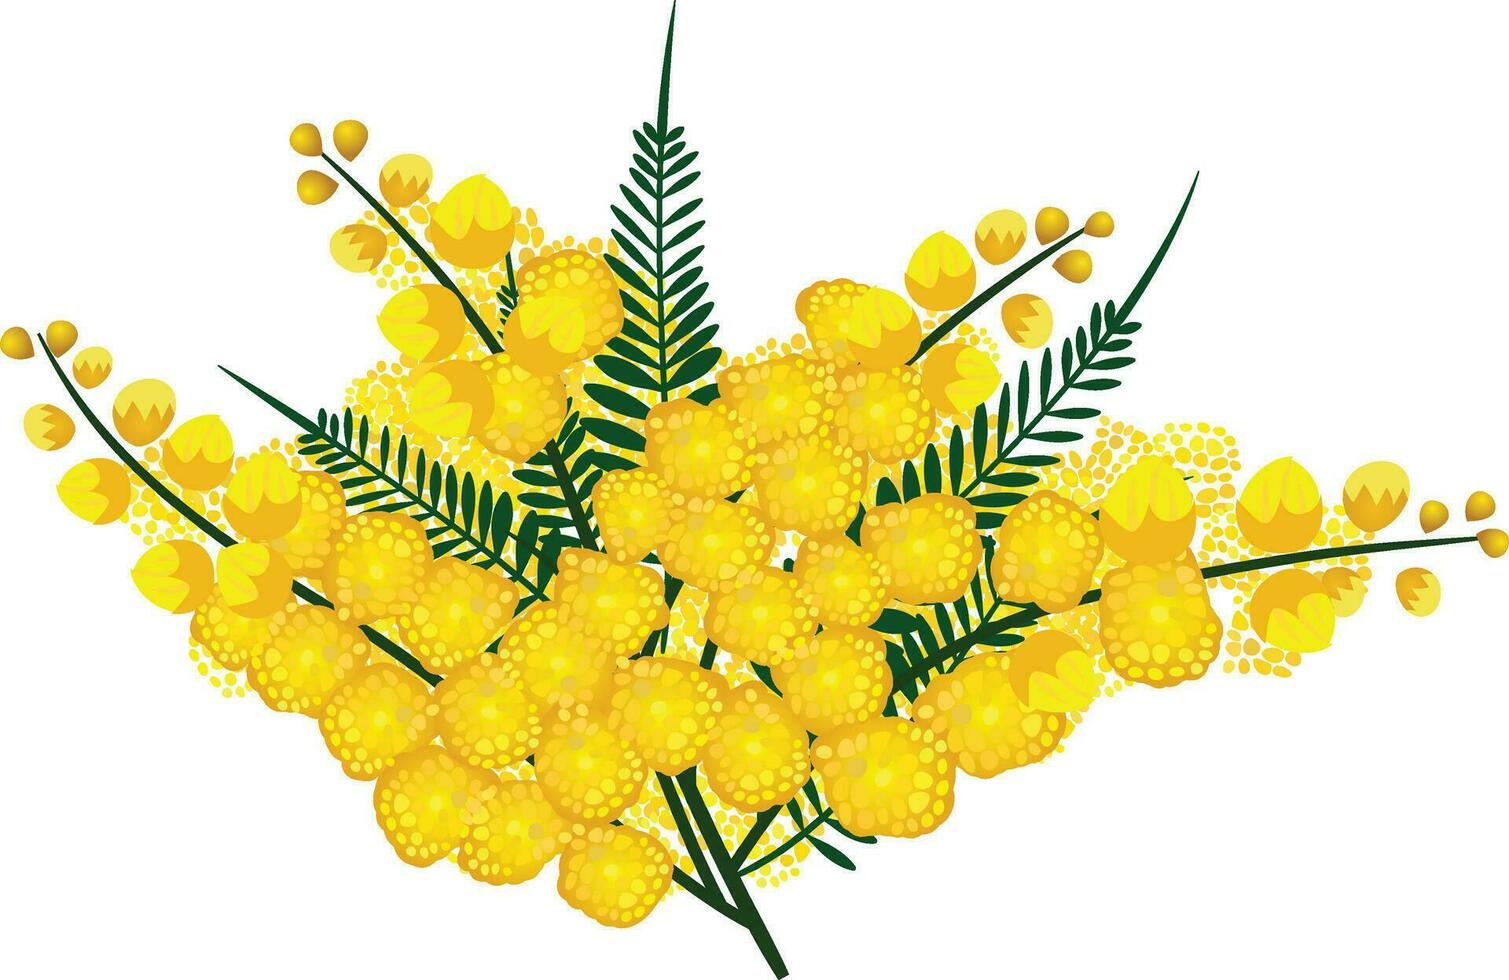 el dorado zarzo, Australia nacional flor vector ilustración, acacia pycnantha benth vector imagen